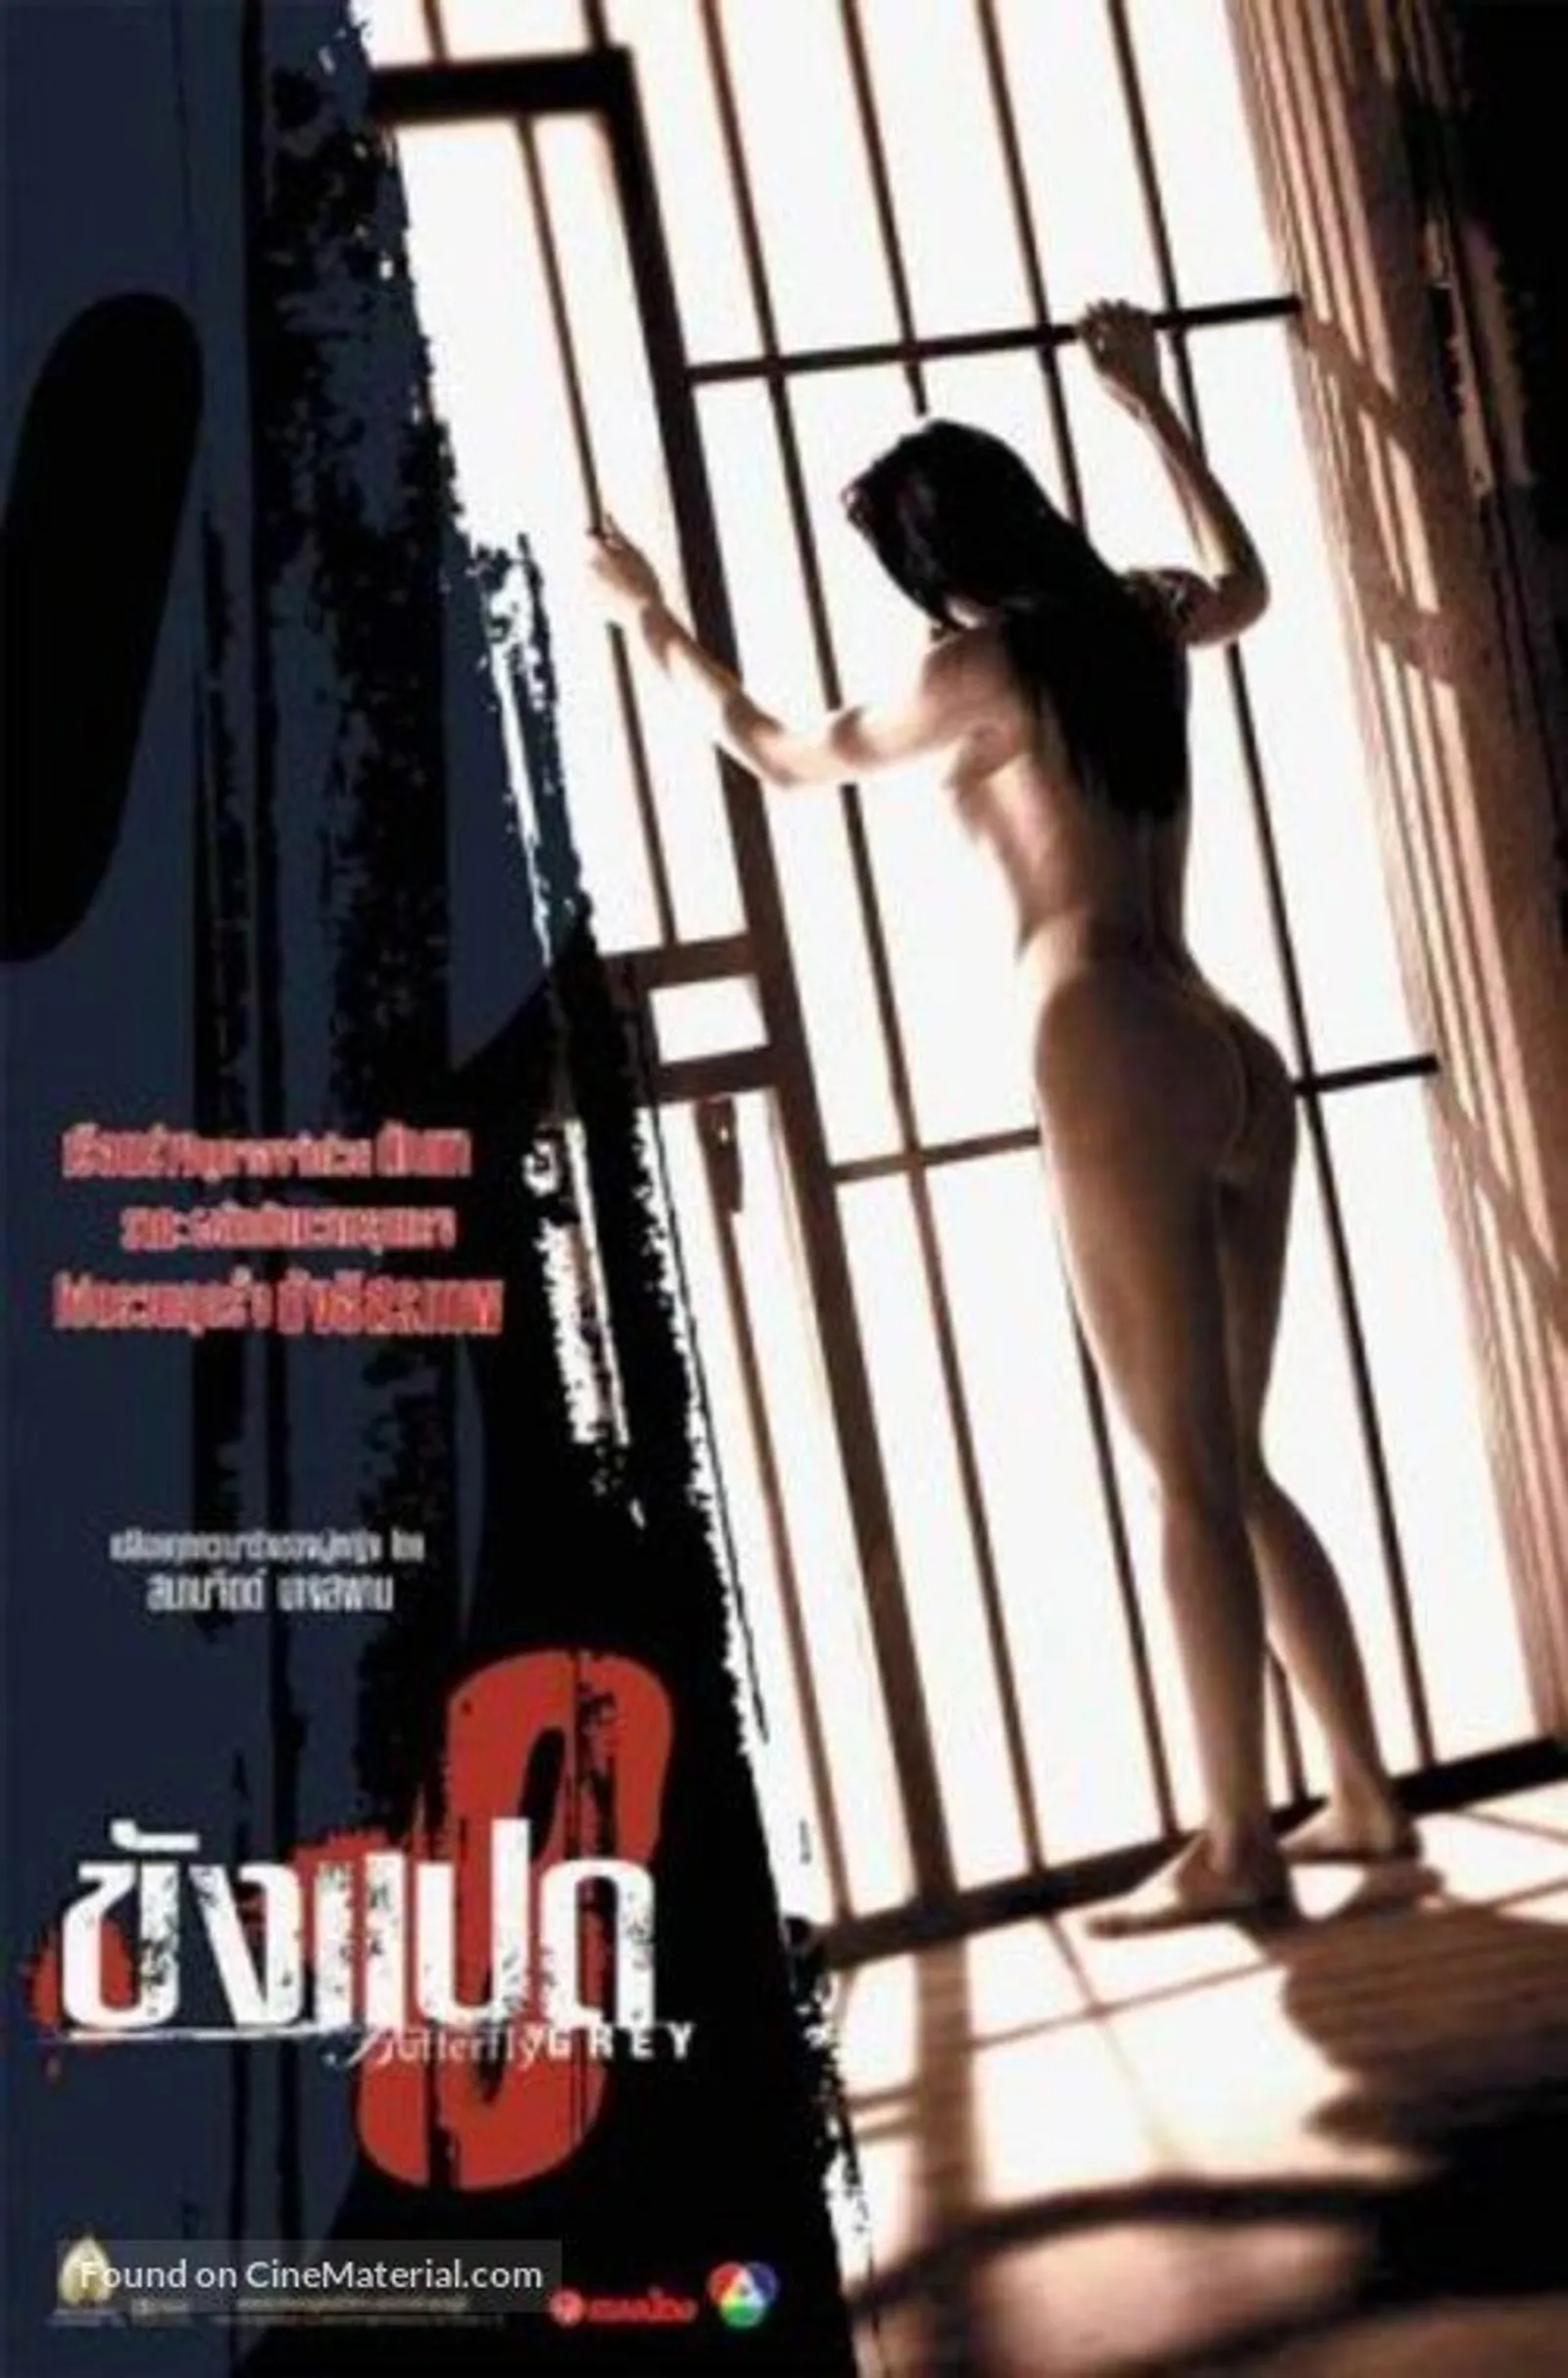 Ada Erotisme, 10 Film Semi Thailand Genre Horor dan Komedi 